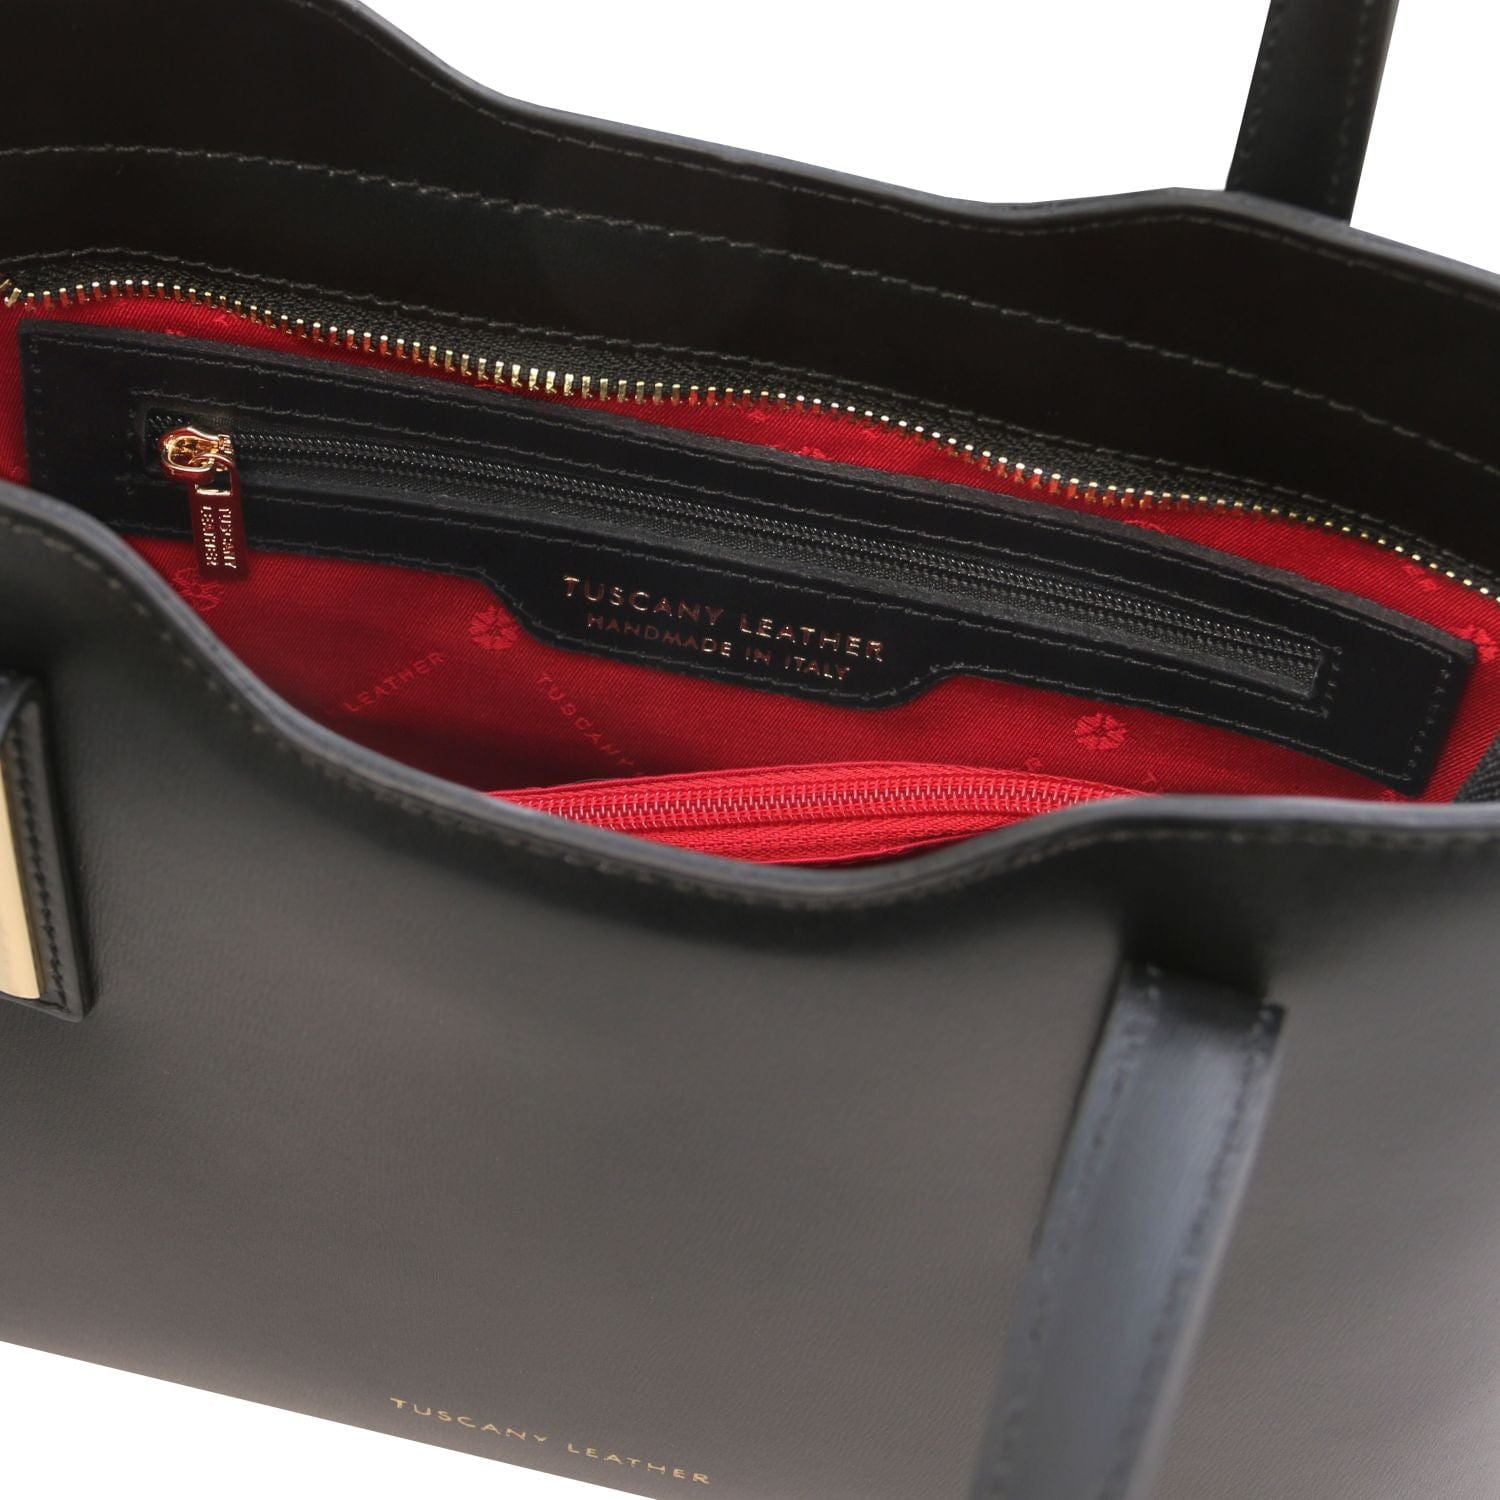 Olimpia - Leather tote - Small size | TL141521 - Premium Leather handbags - Shop now at San Rocco Italia